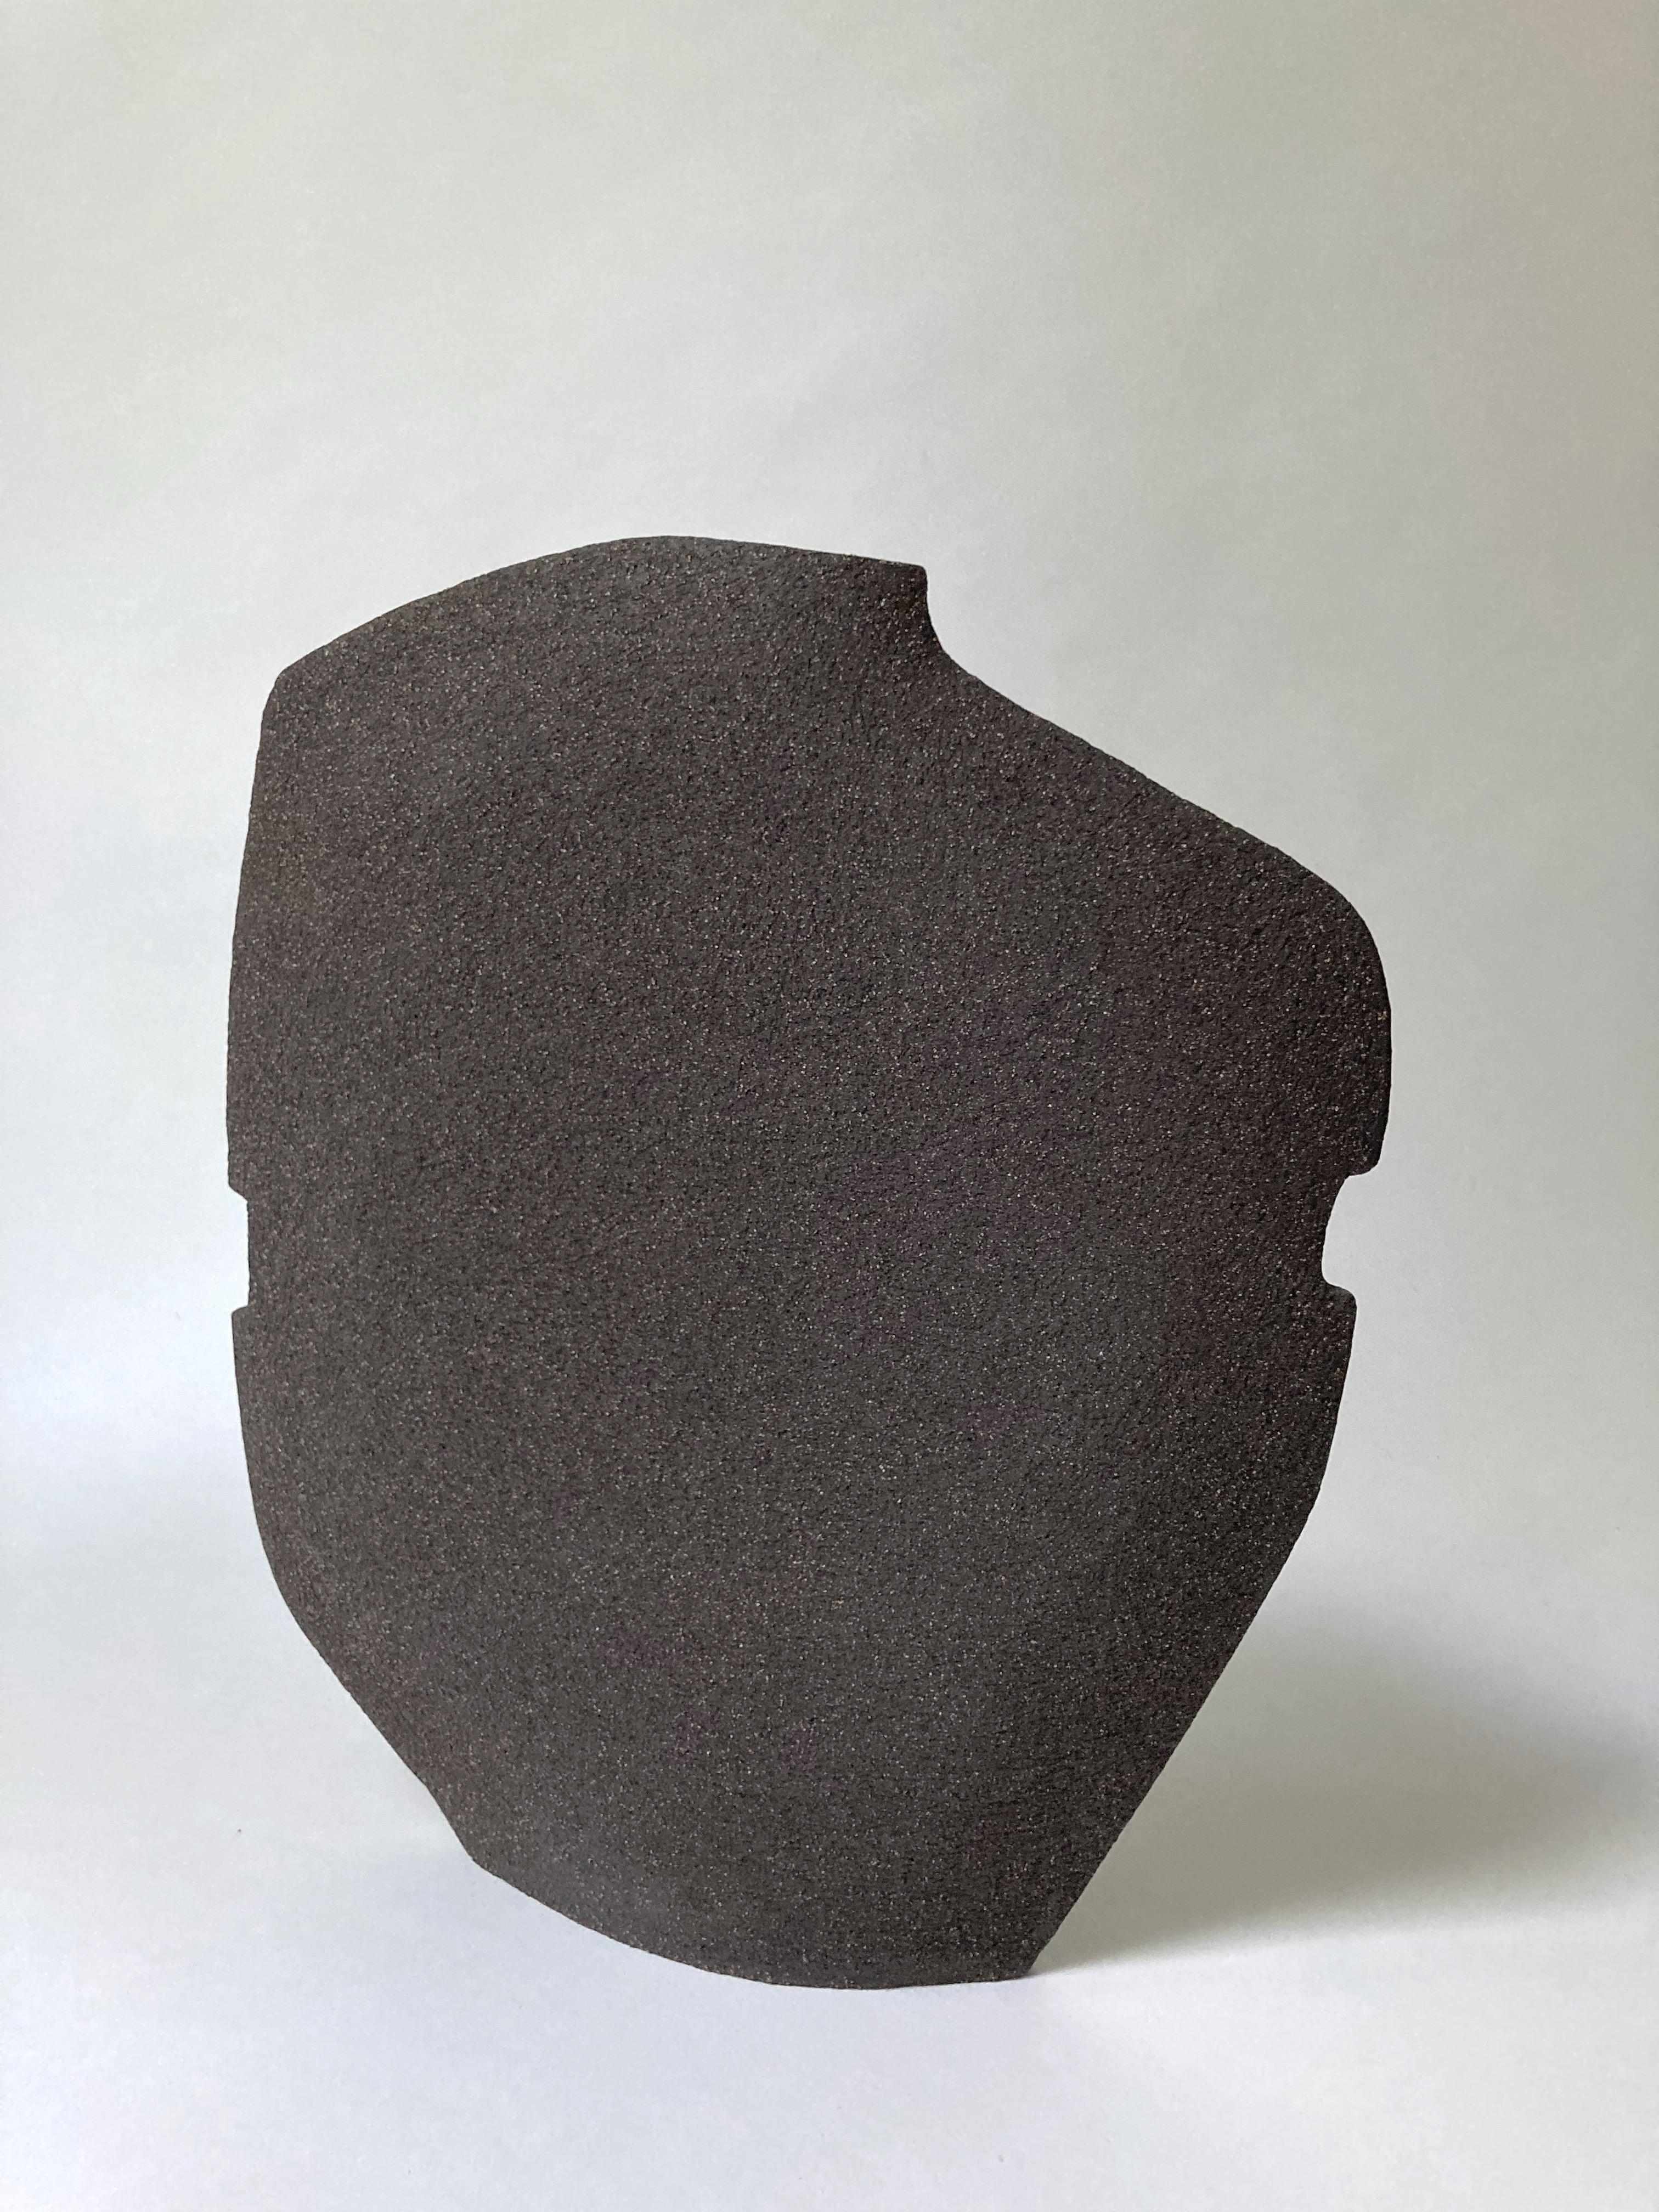 Tribu M5 Roc by Léontine Furcy
Unique piece
Materials: raw chamotte, black sandstone
Dimensions: H 38 cm x L 31 cm

Léontine Furcy, ceramic artist, tells about herself in shapes, textures, curves, asymmetries, purifications. Each of the pieces is a